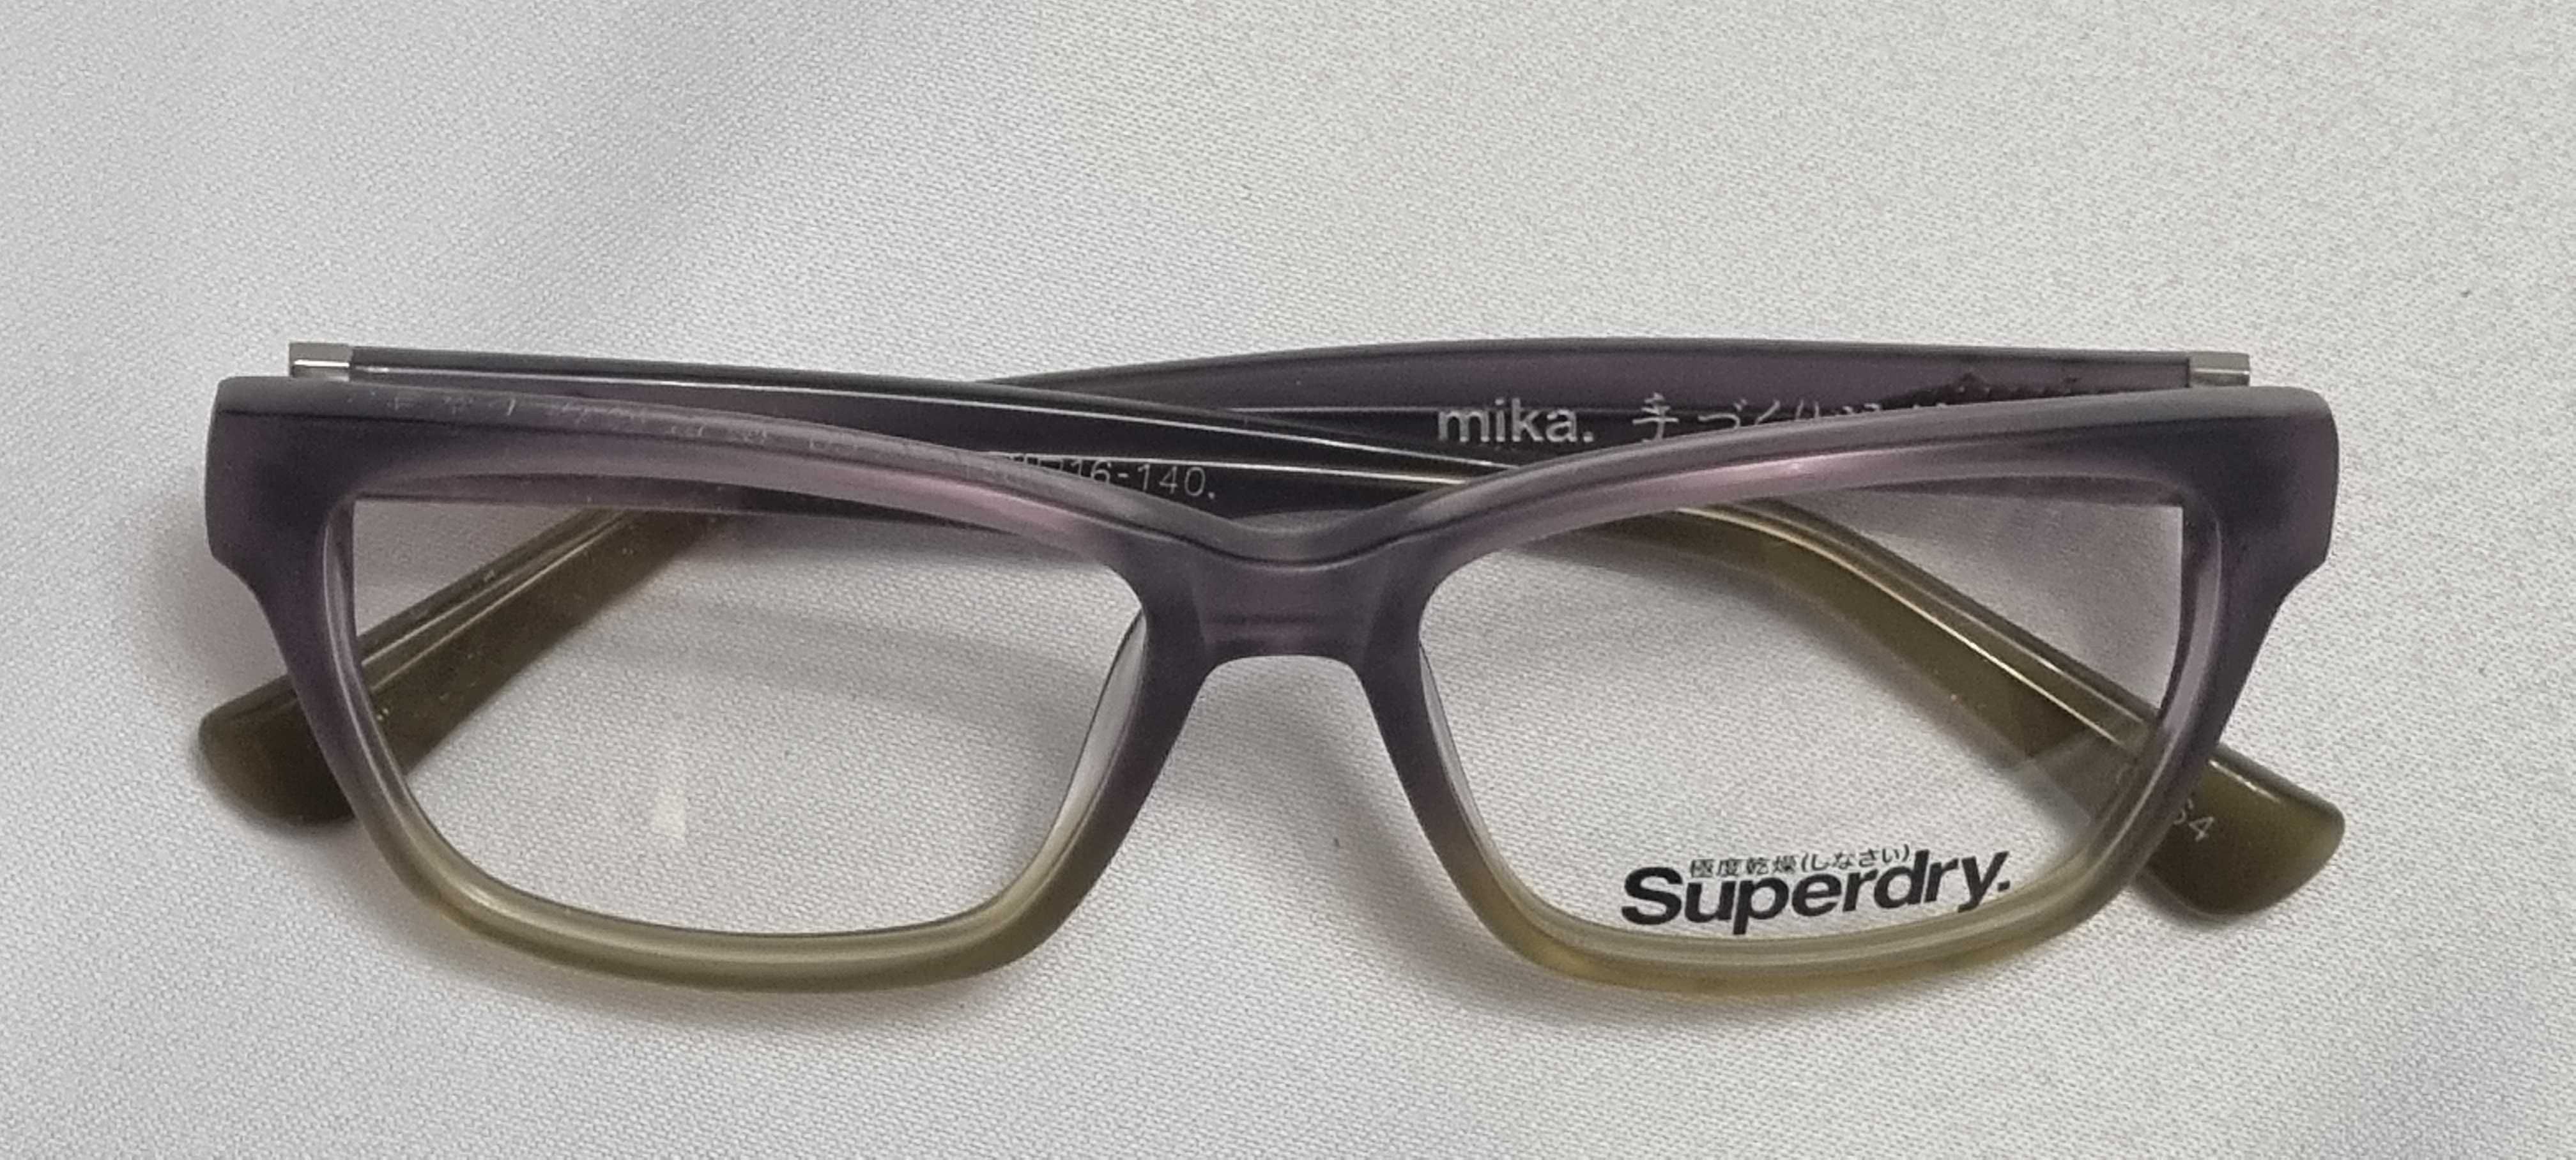 NOWE oprawki Superdry model MIKA 1164#J34